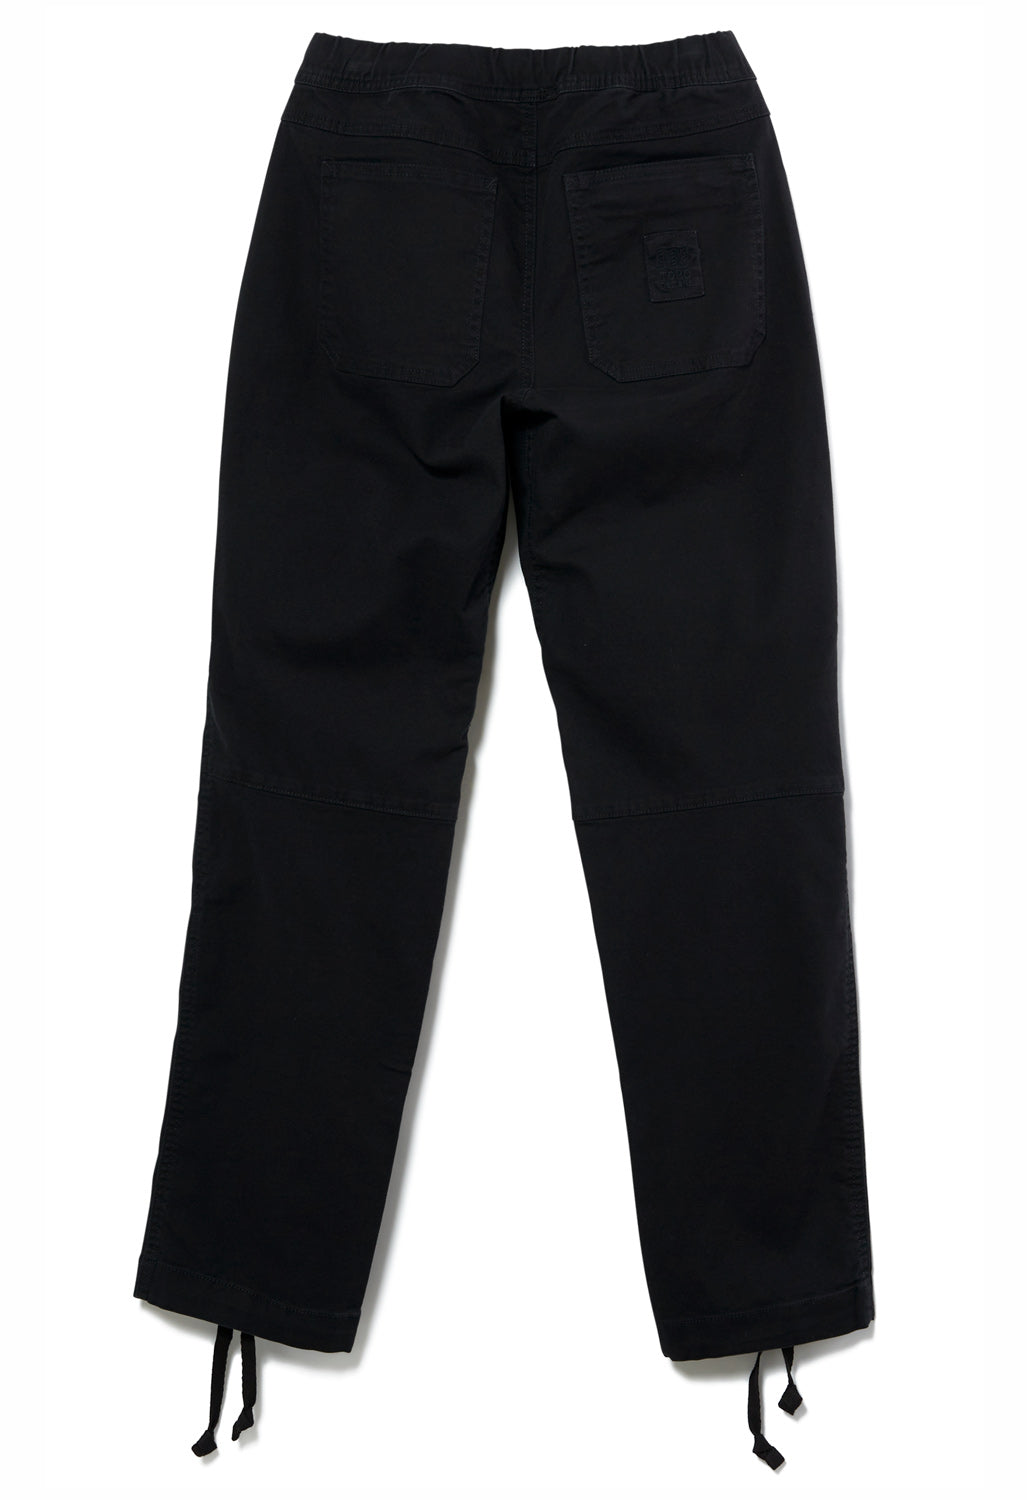 Topo Designs Women's Dirt Pants - Black